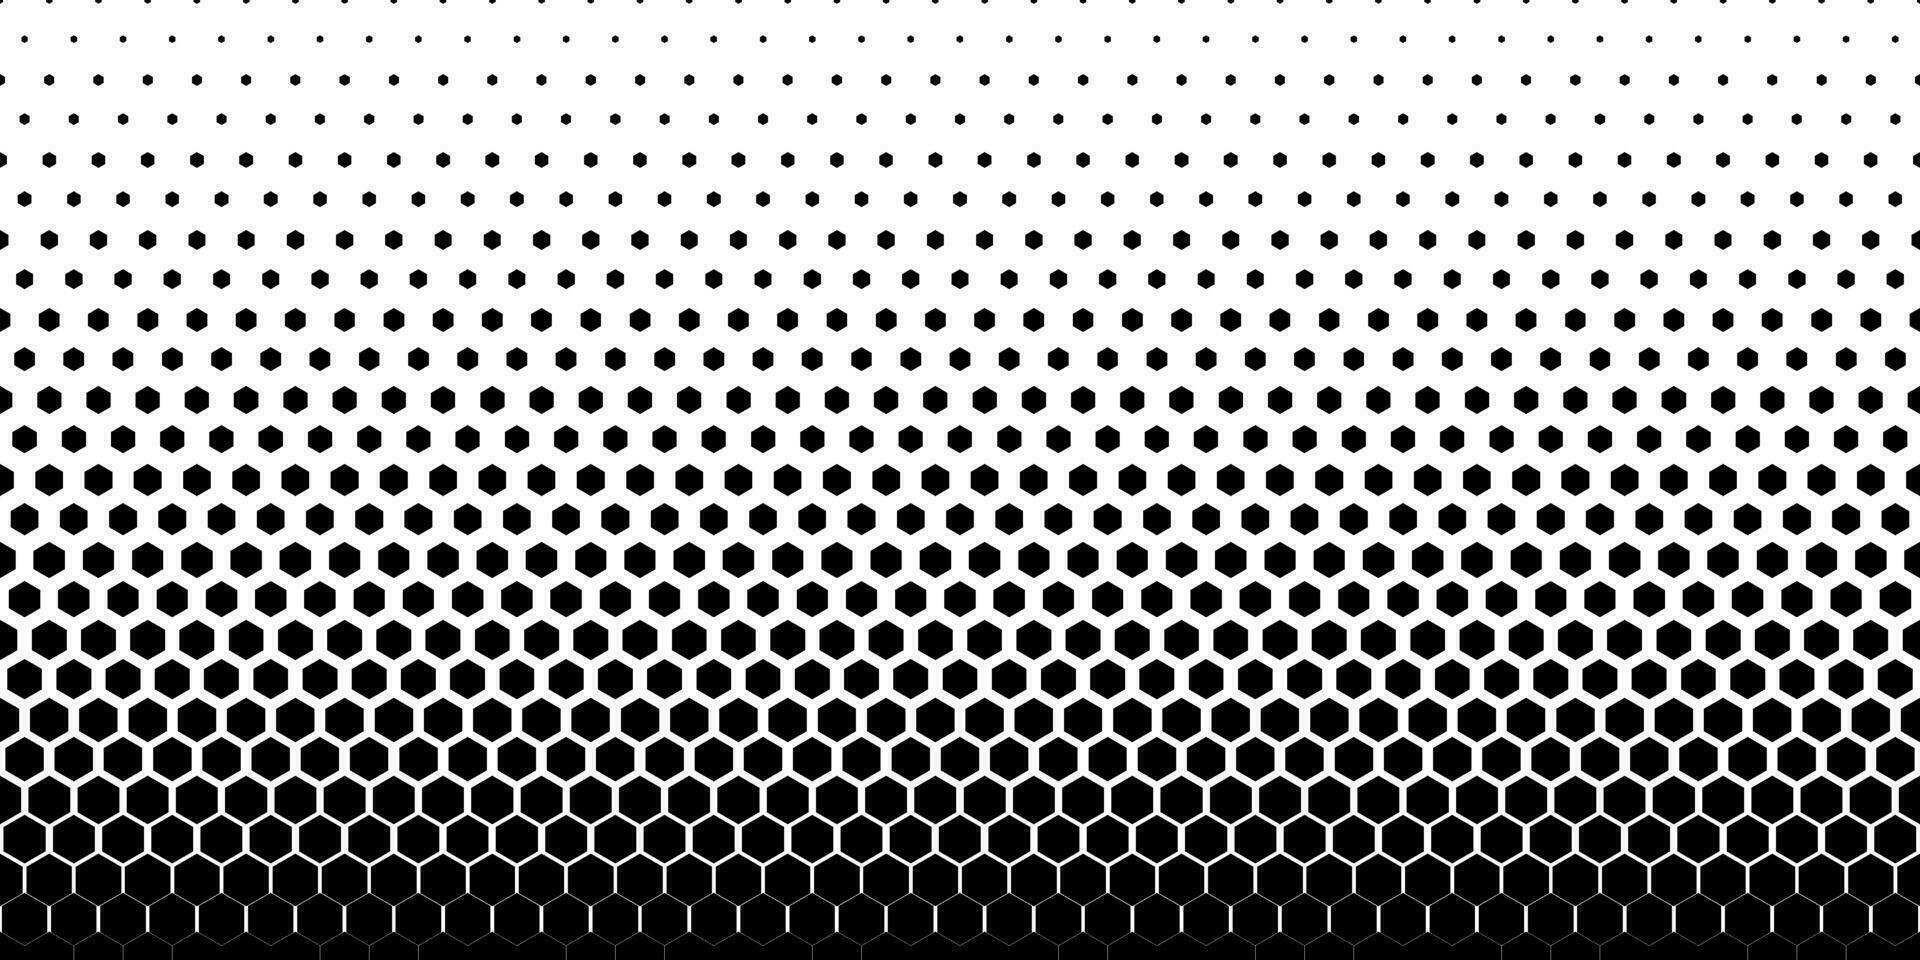 svart vit hexagonal halvton mönster vektor